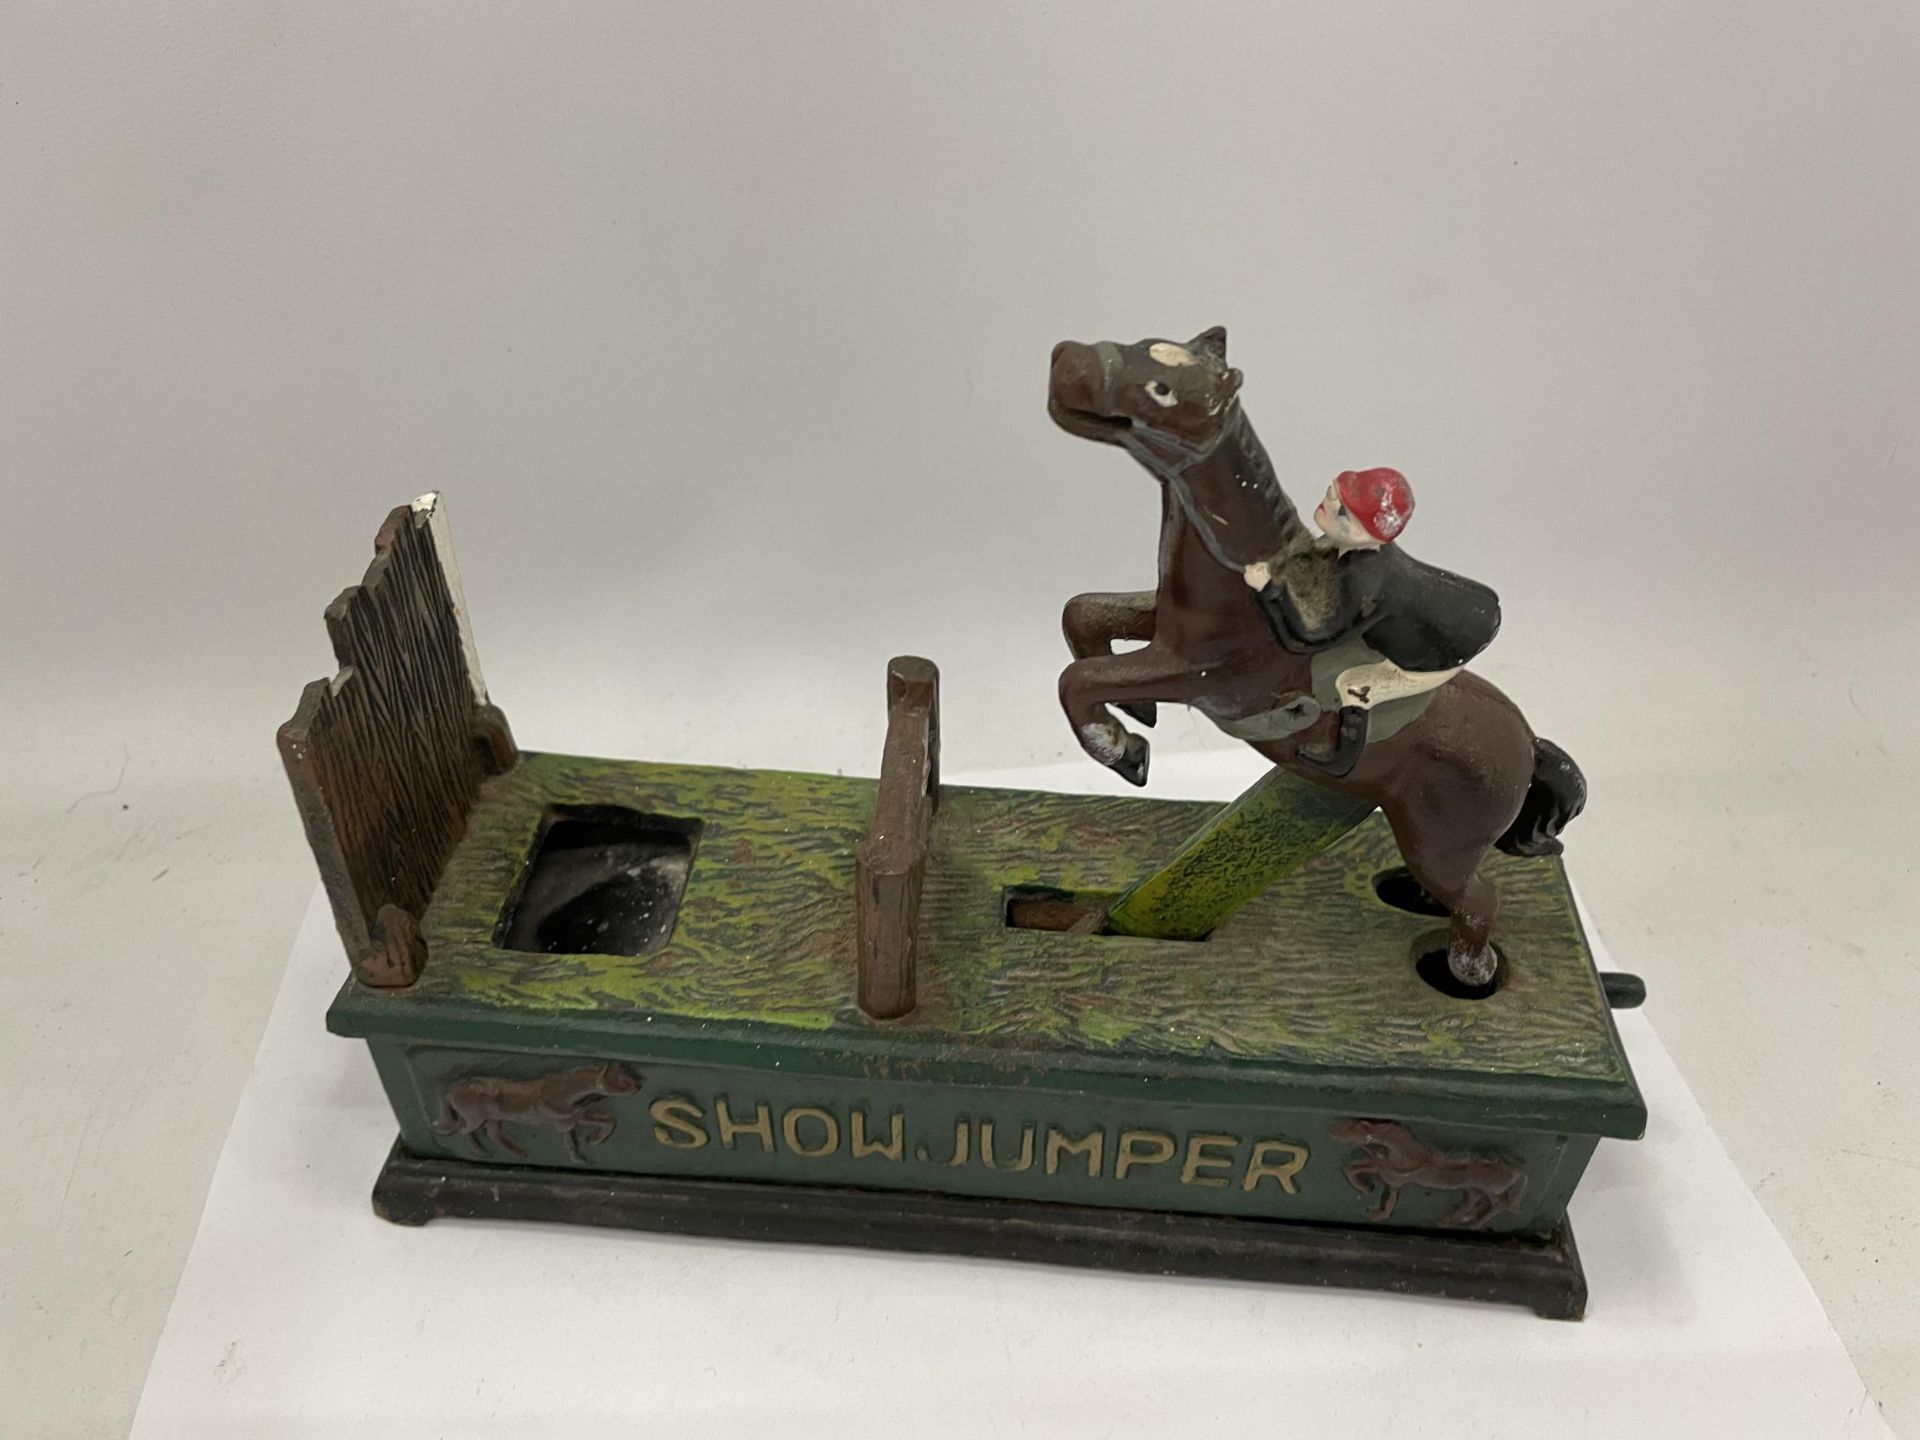 A CAST METAL SHOW JUMPER MONEY BOX - Image 3 of 3